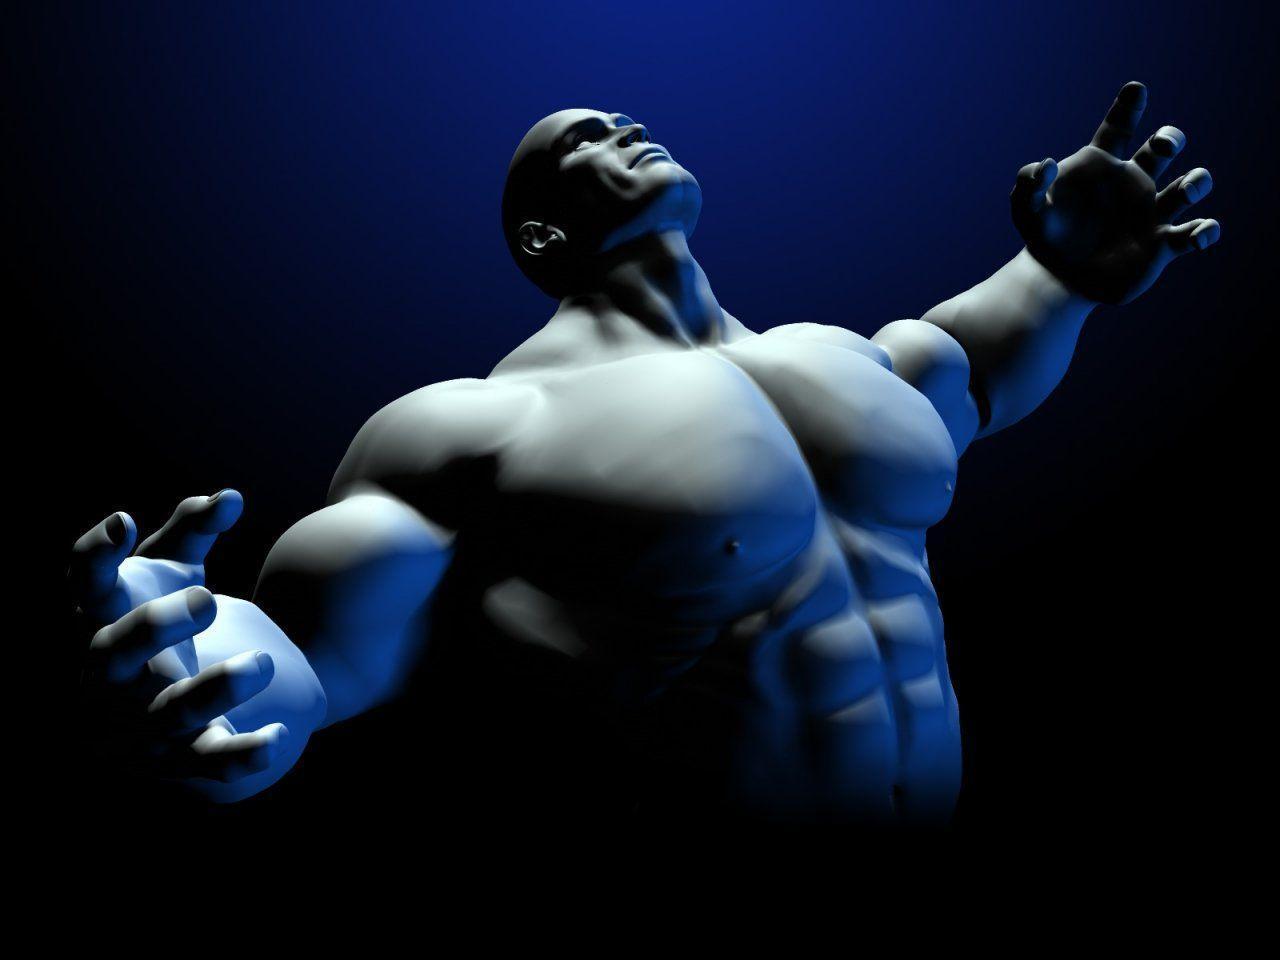 Muscle Man Wallpaper. Digital art Wallpaper Gallery. PC Desktop